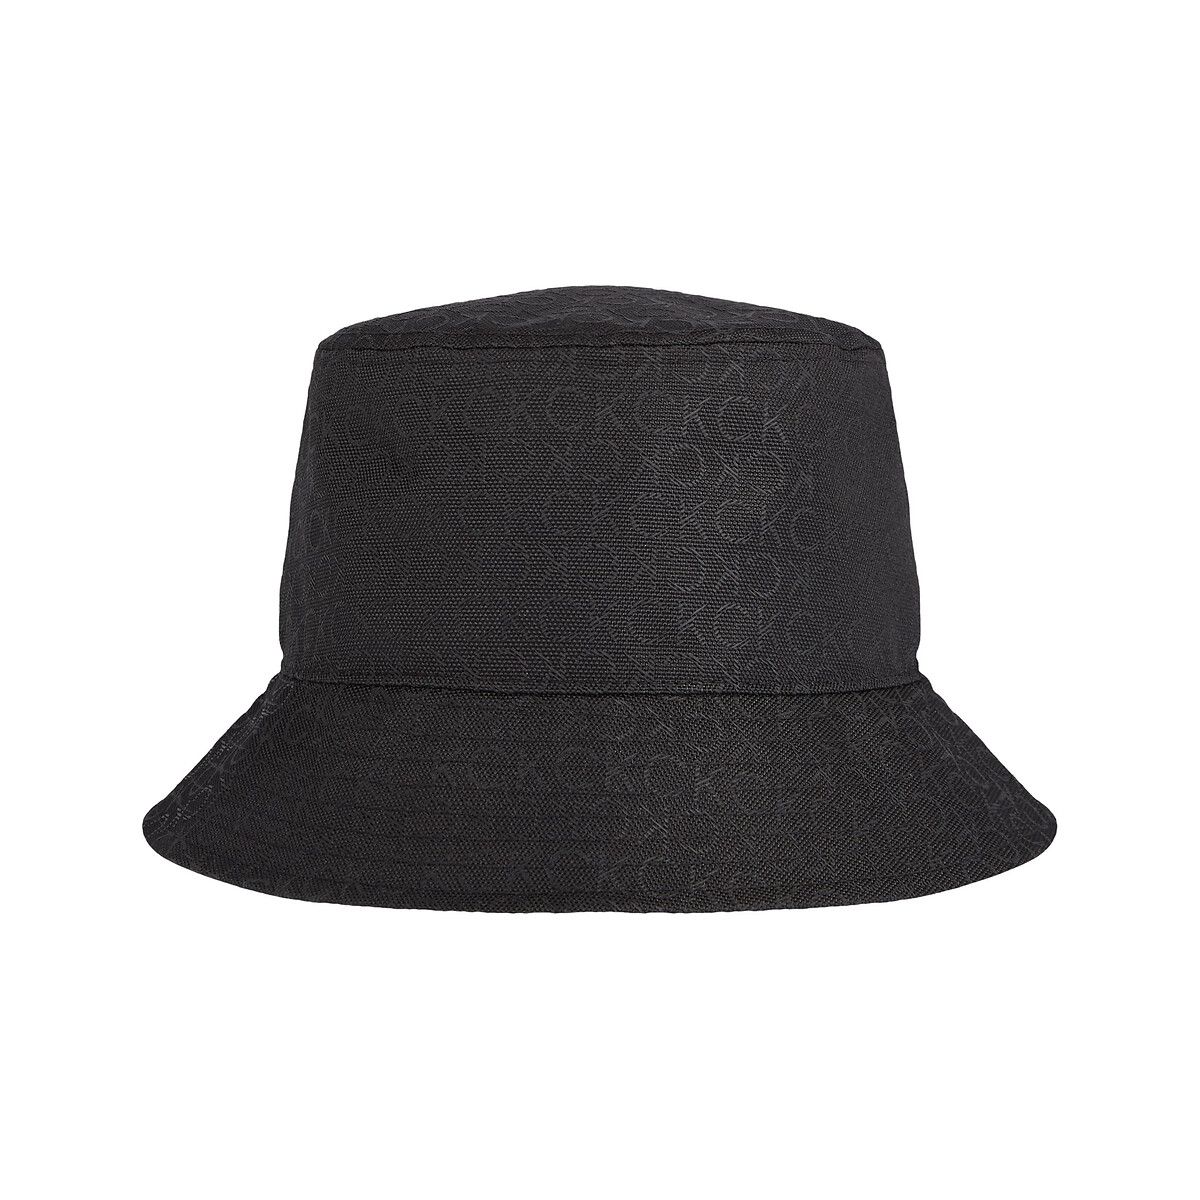 Image of Monogram Jacquard Bucket Hat